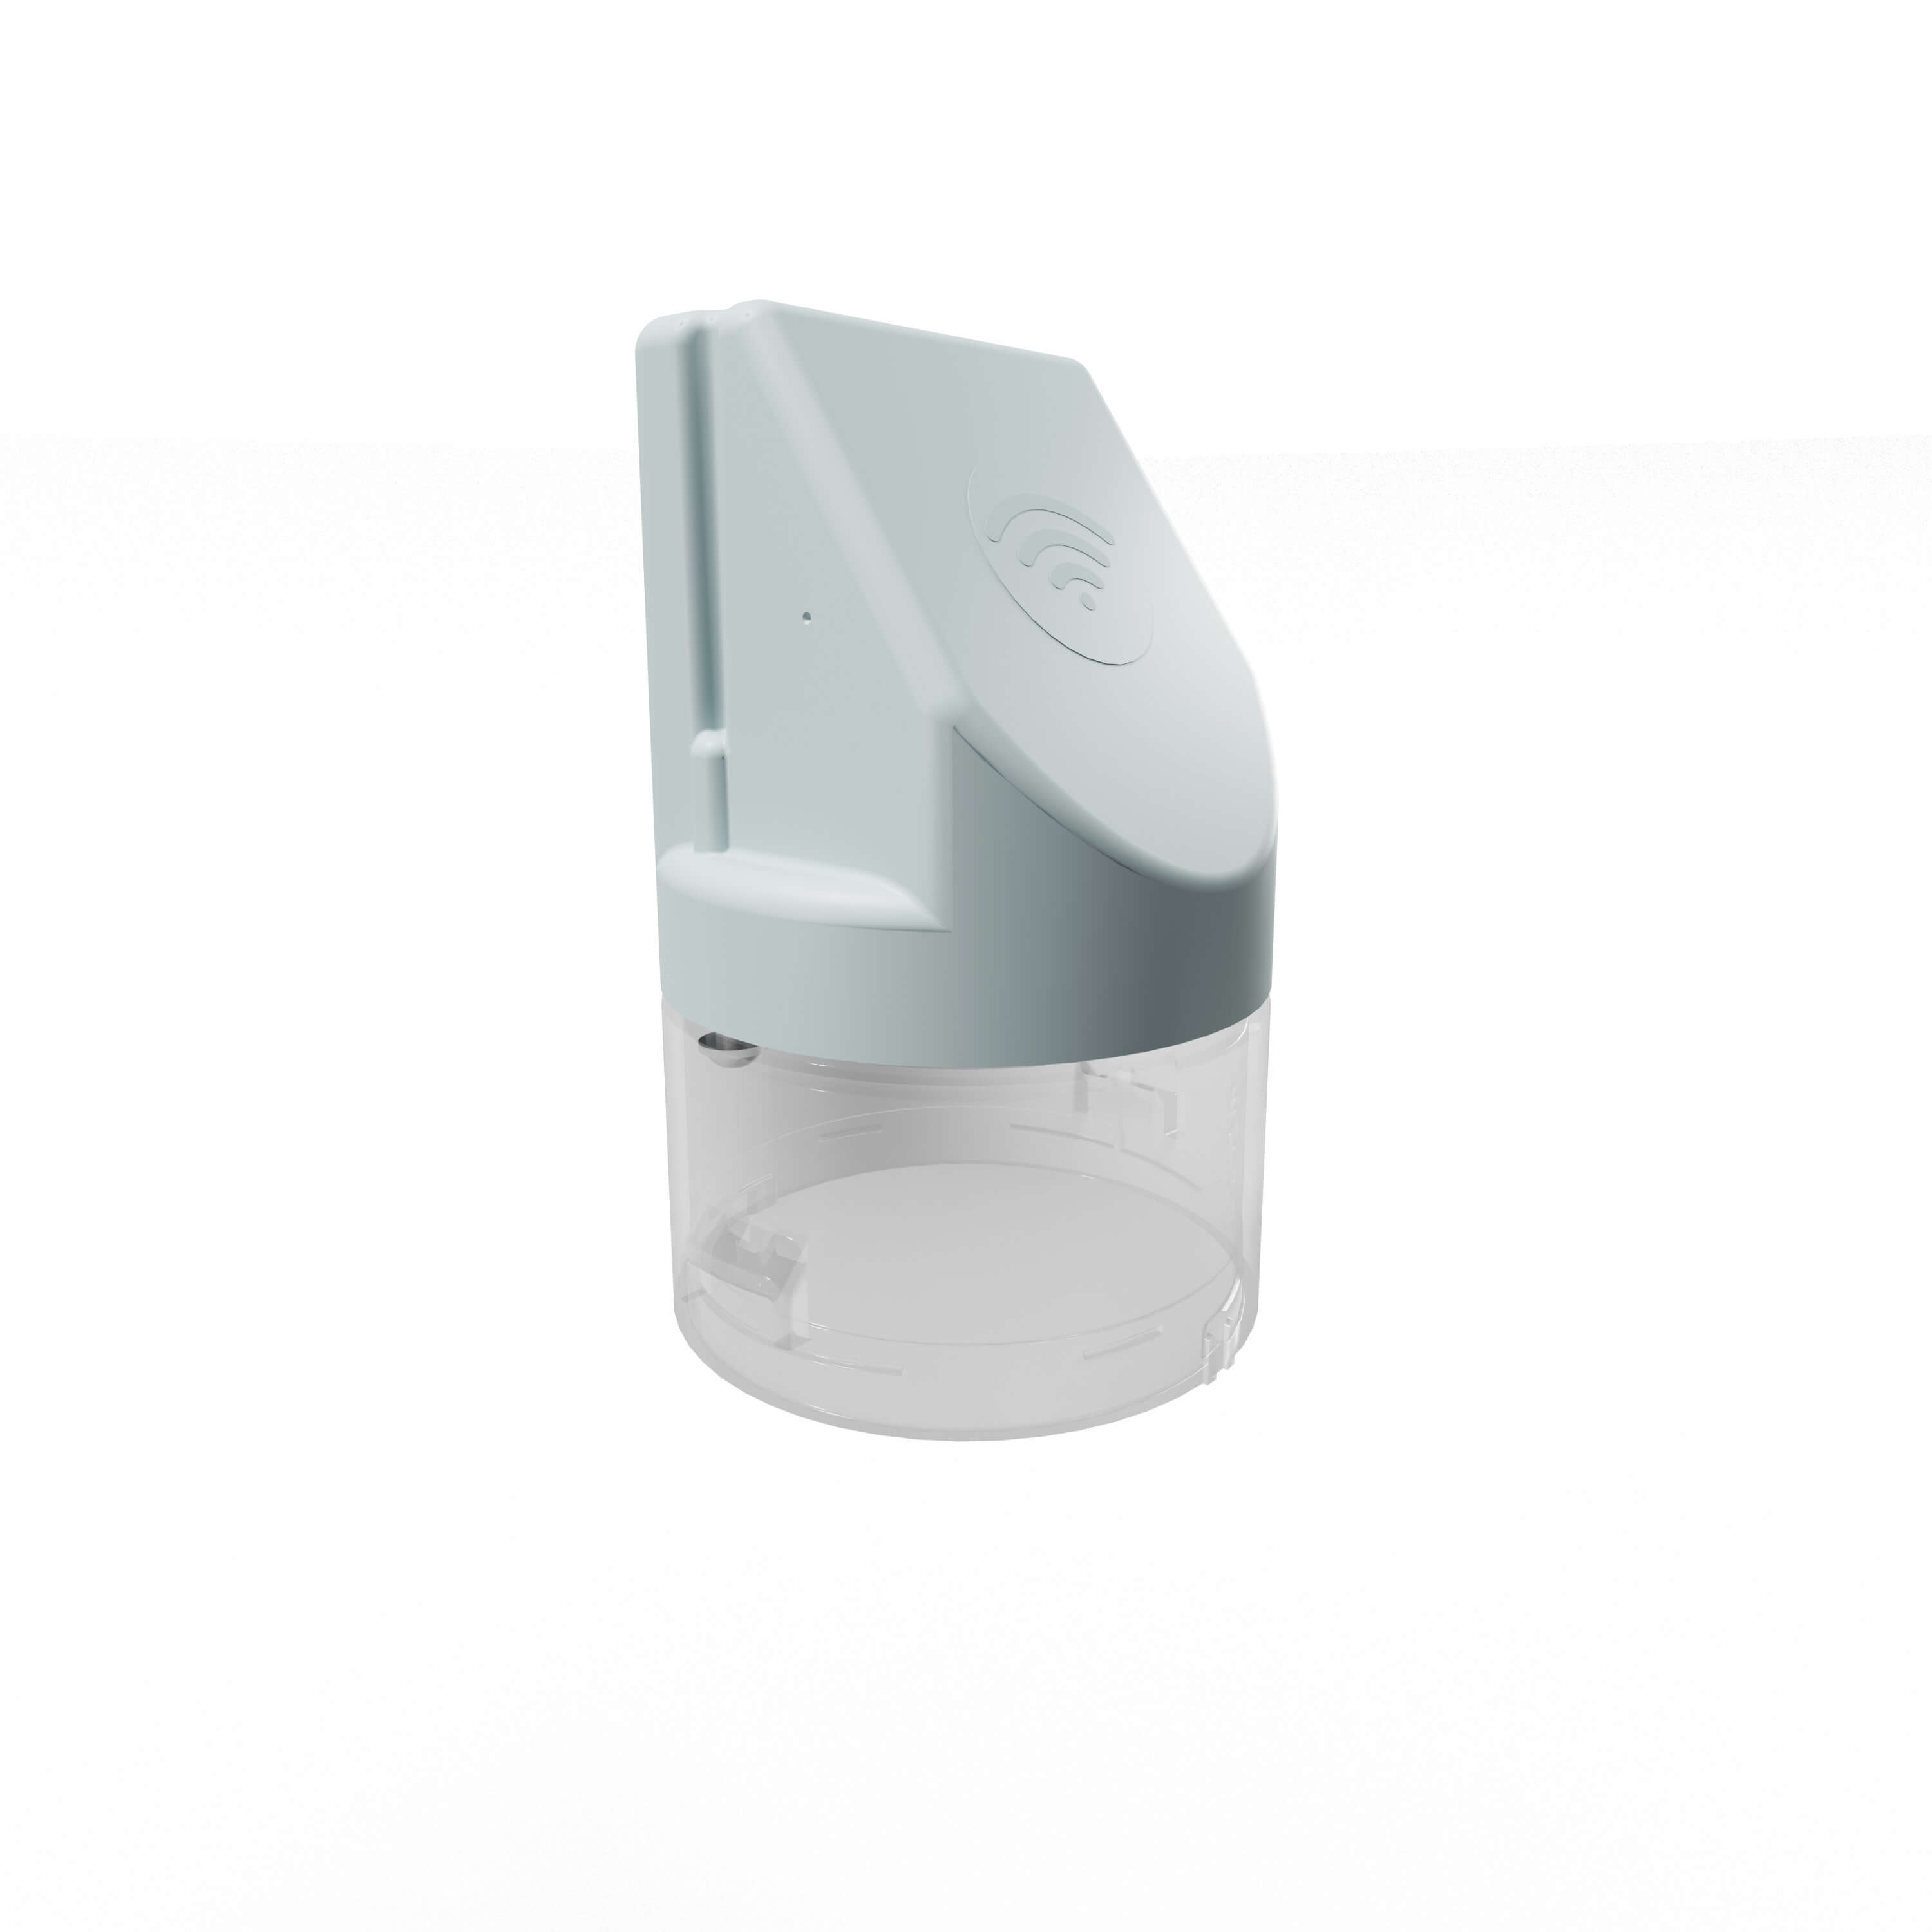 Camro NFC Teller voor Safetrap A25 trap